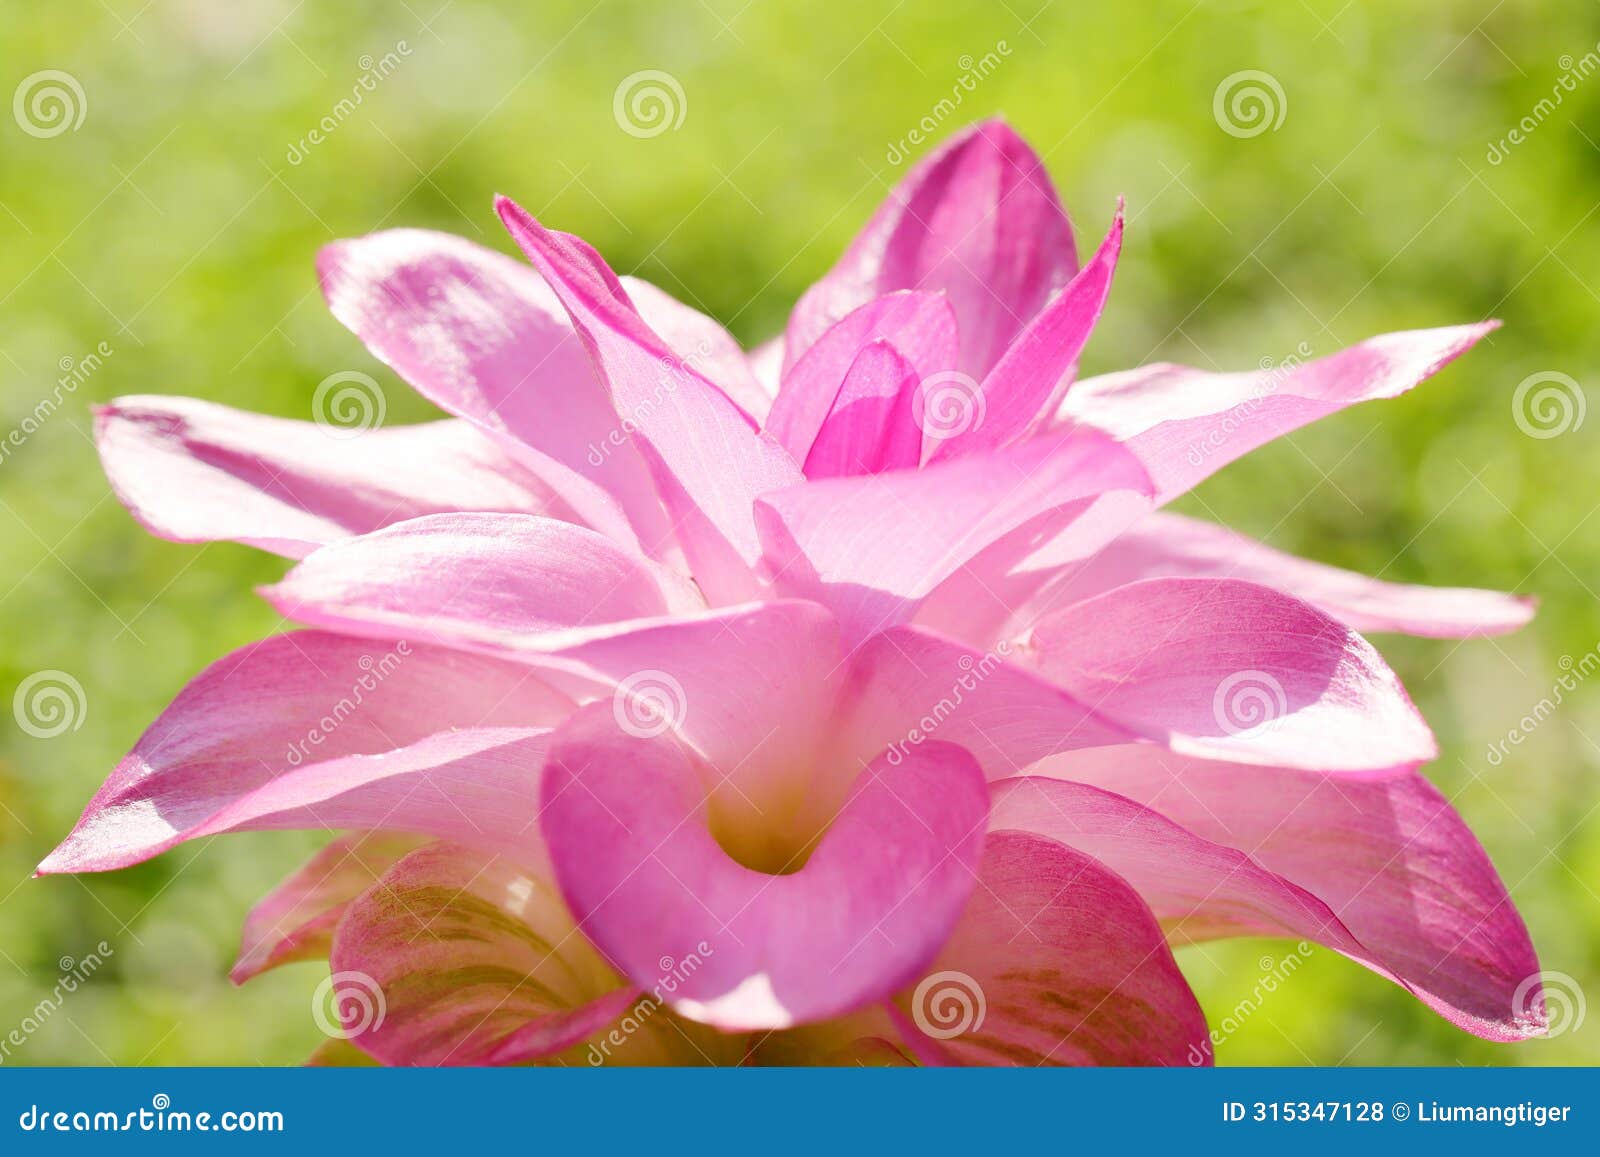 the close-up look of curcuma aromatica flower